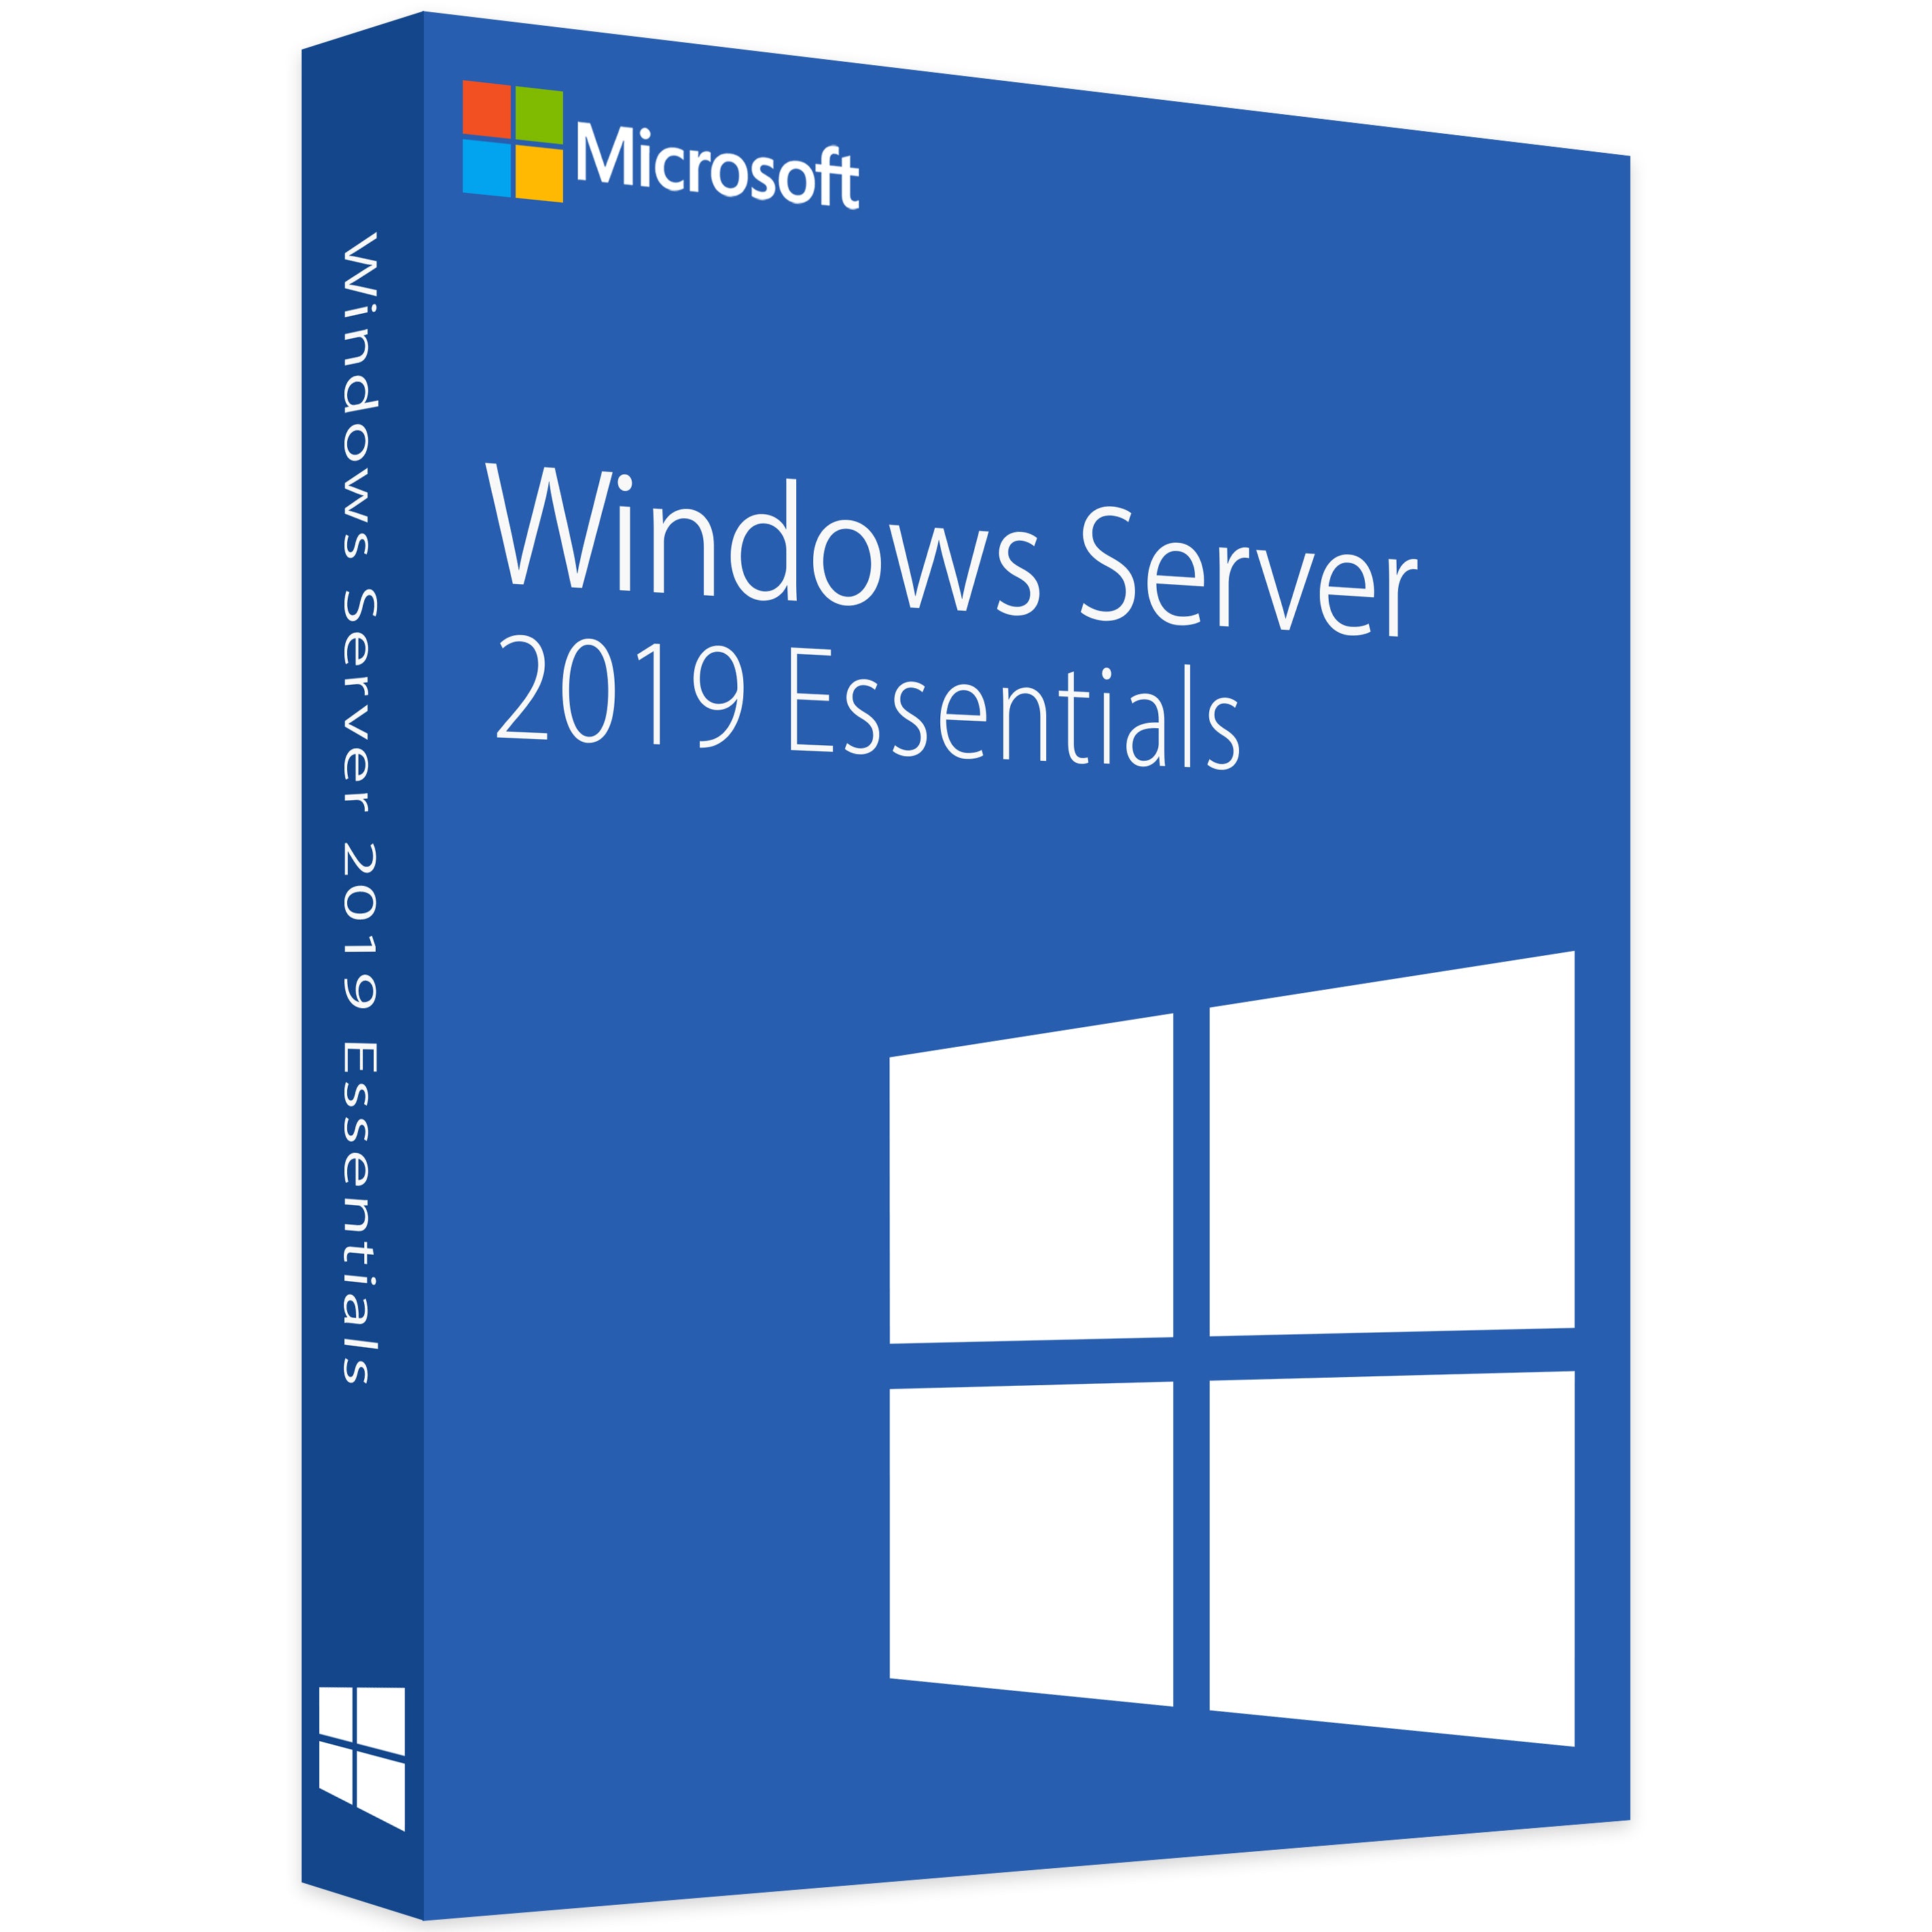 Microsoft Windows Server 2019 Essentials - Lifetime License 1PC